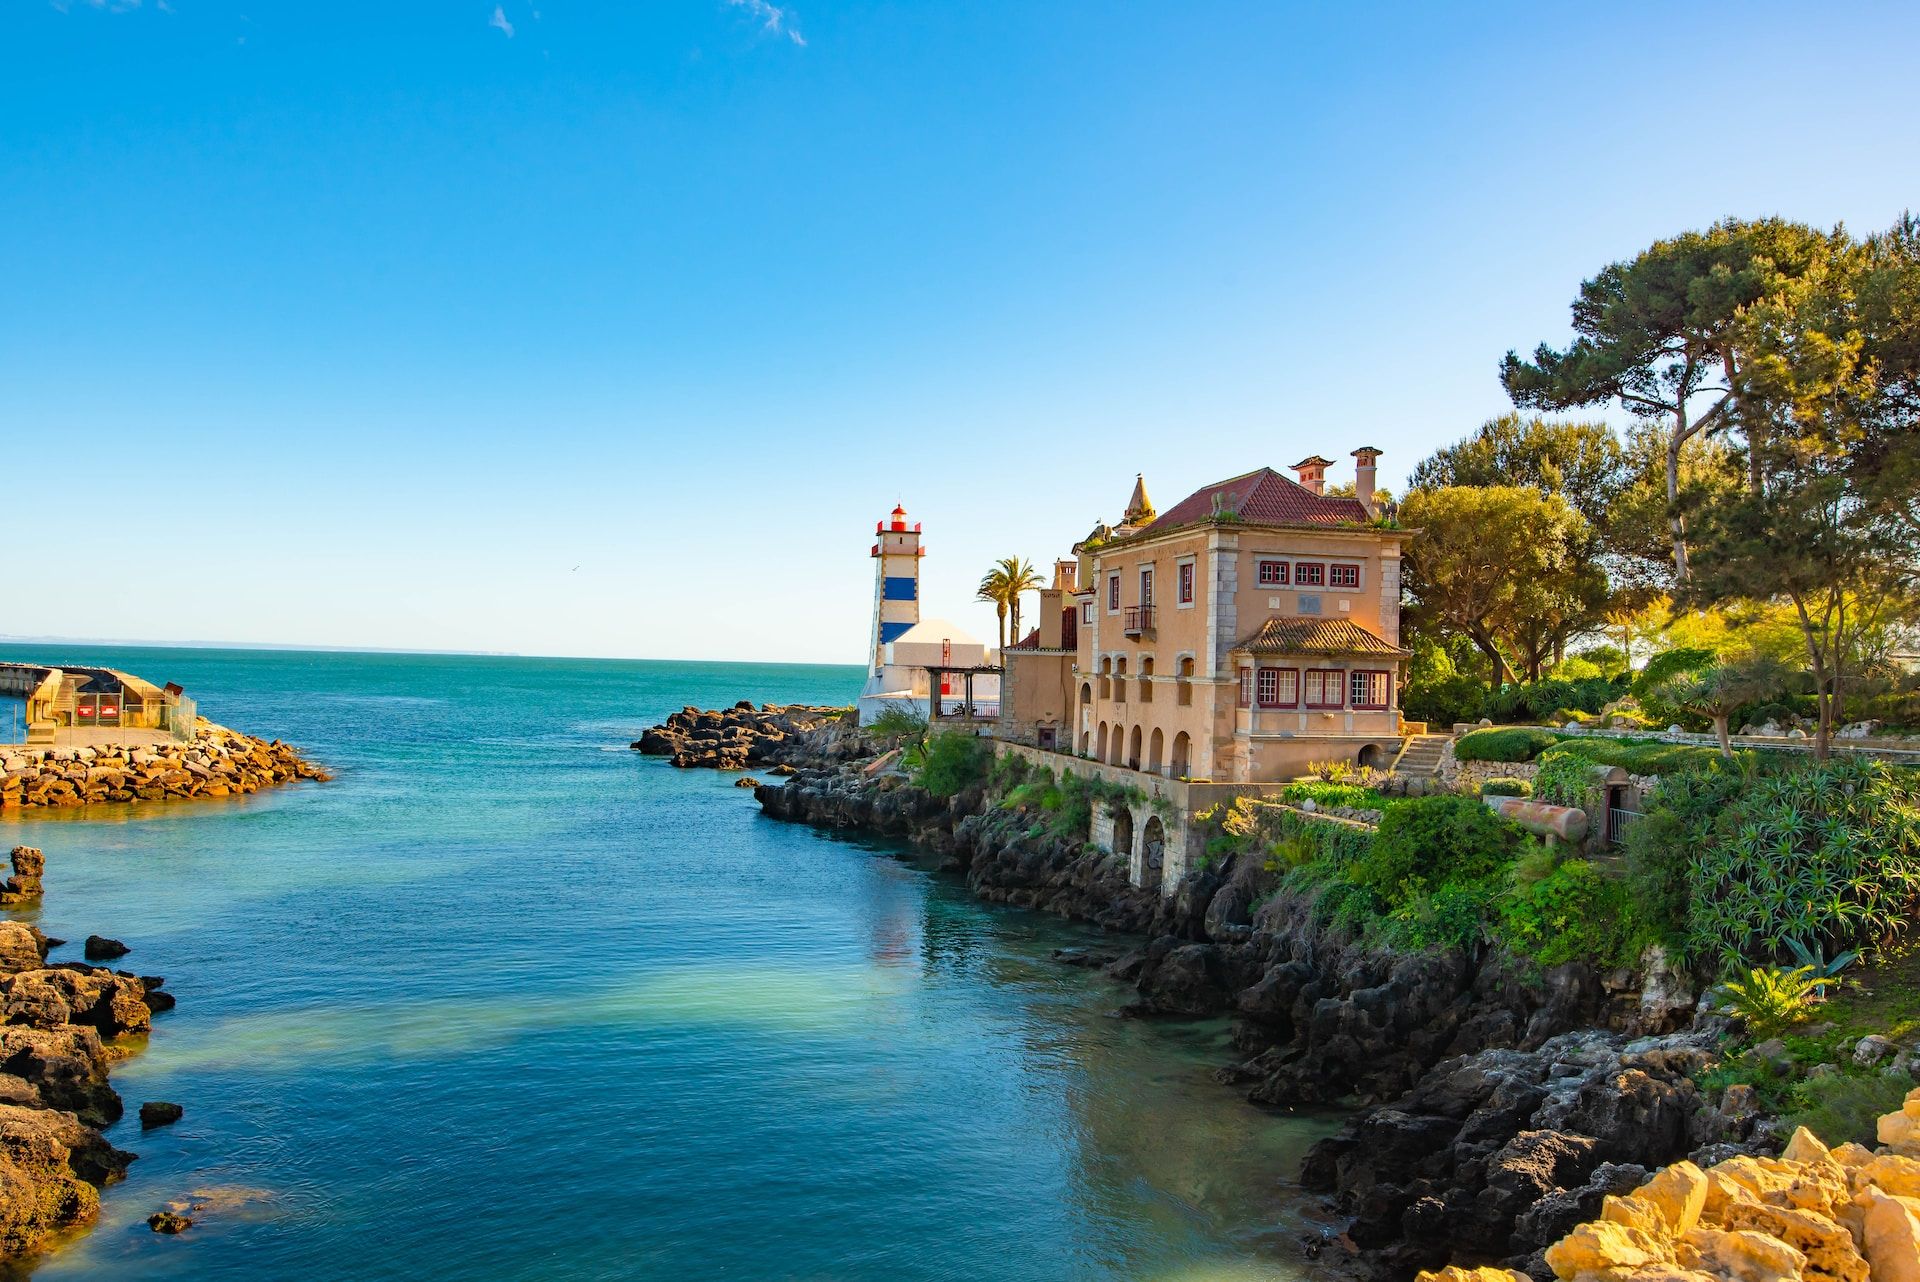 Santa Marta Lighthouse in the Cascais Municipality, Portugal